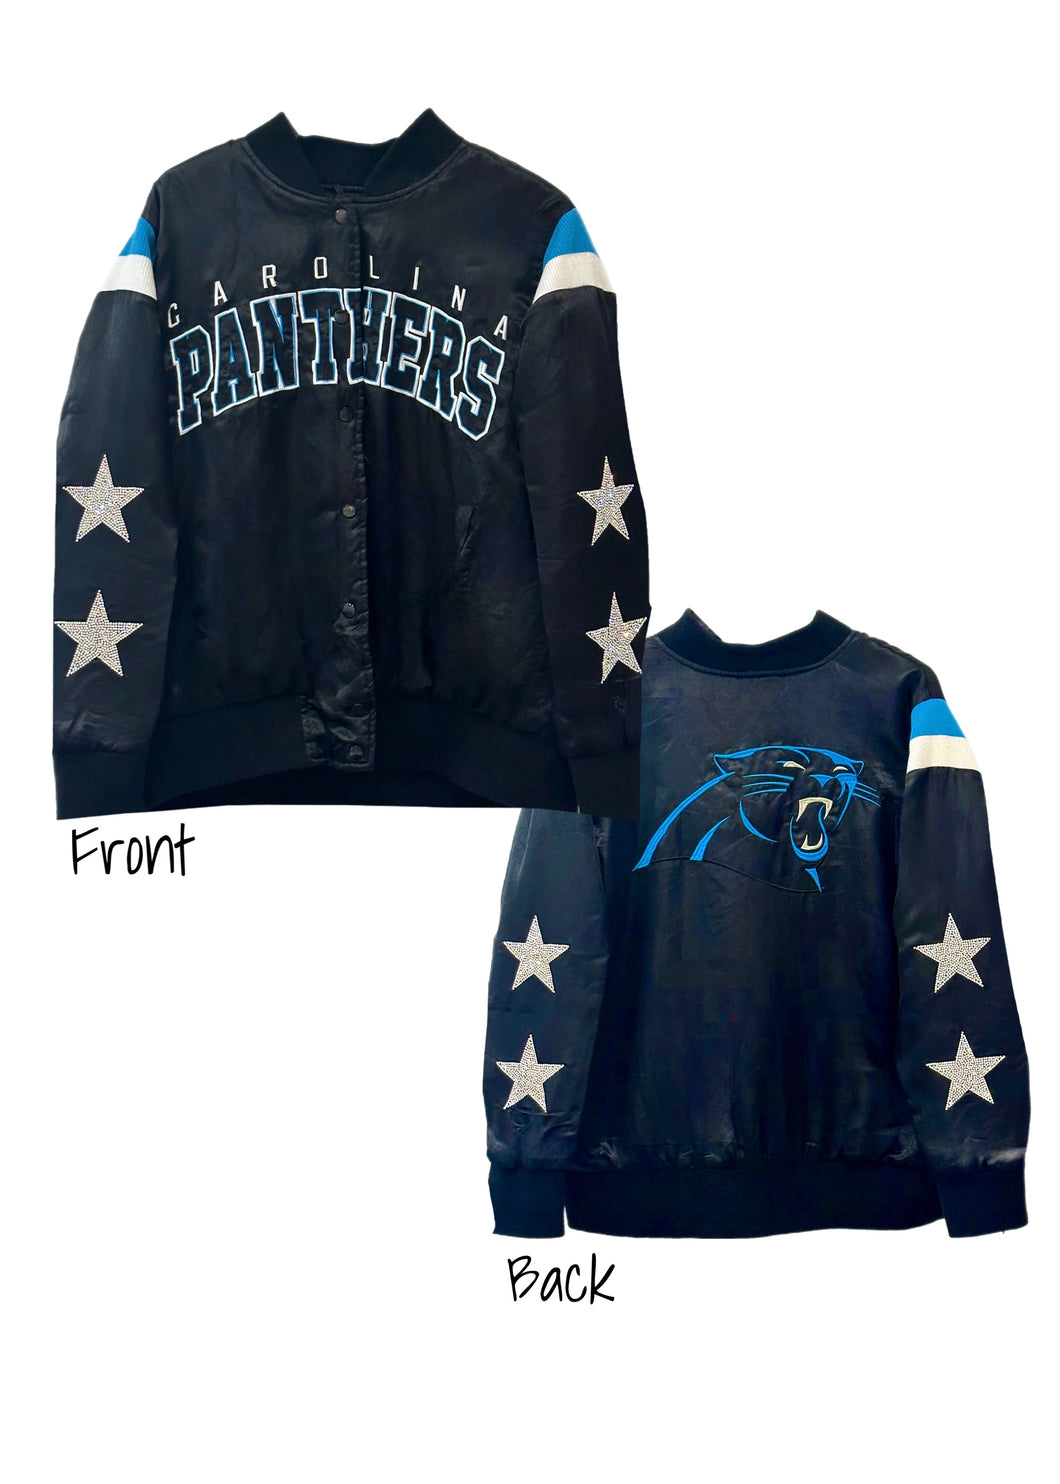 Carolina Panthers, Football One of a KIND Soft Satiny Vintage Bomber Jacket with Crystal Star Design